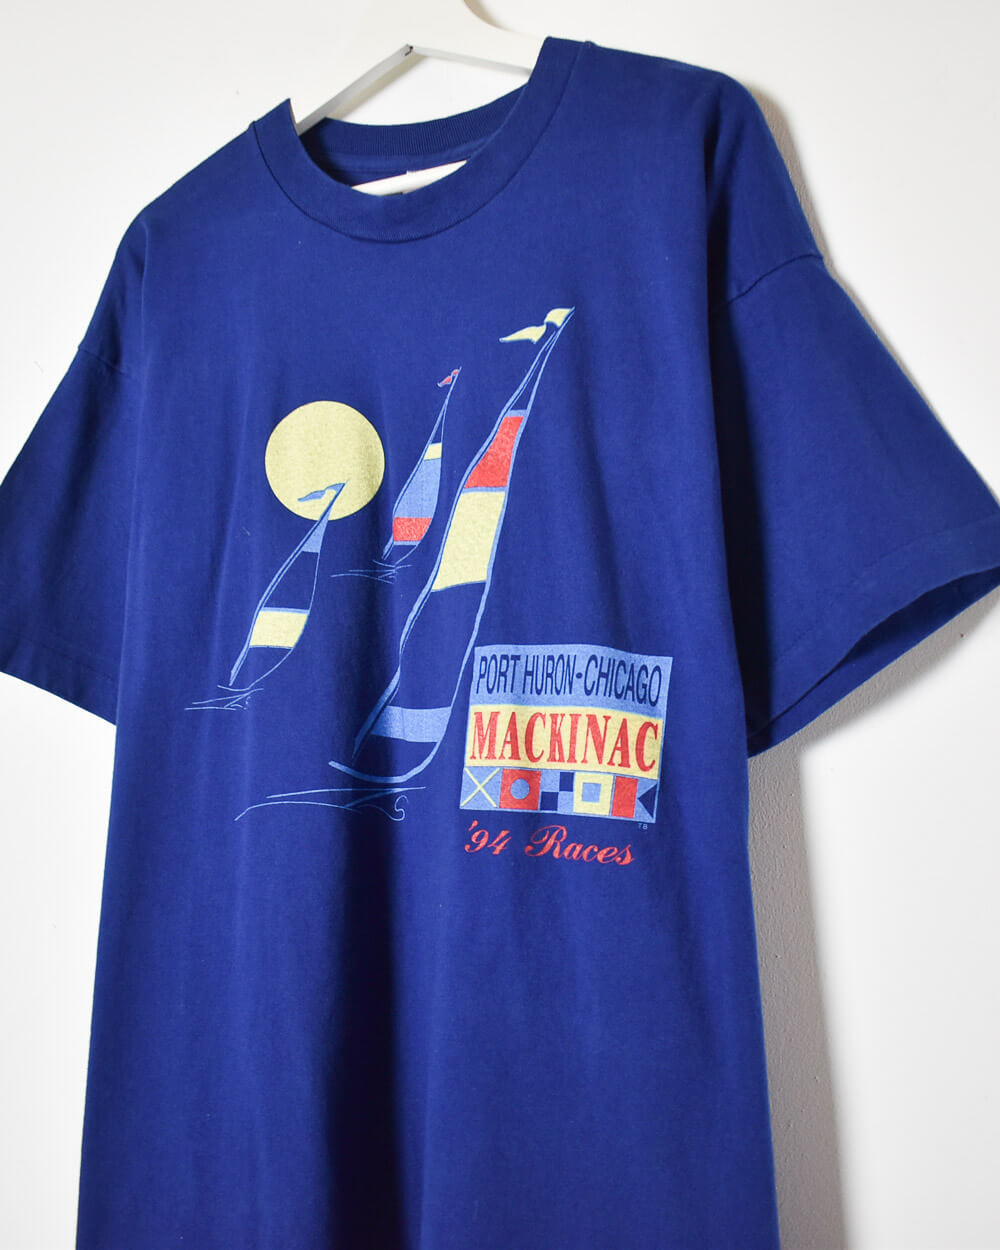 Blue Port Huron Chicago 94 Mackinac Races T-Shirt - XX-Large